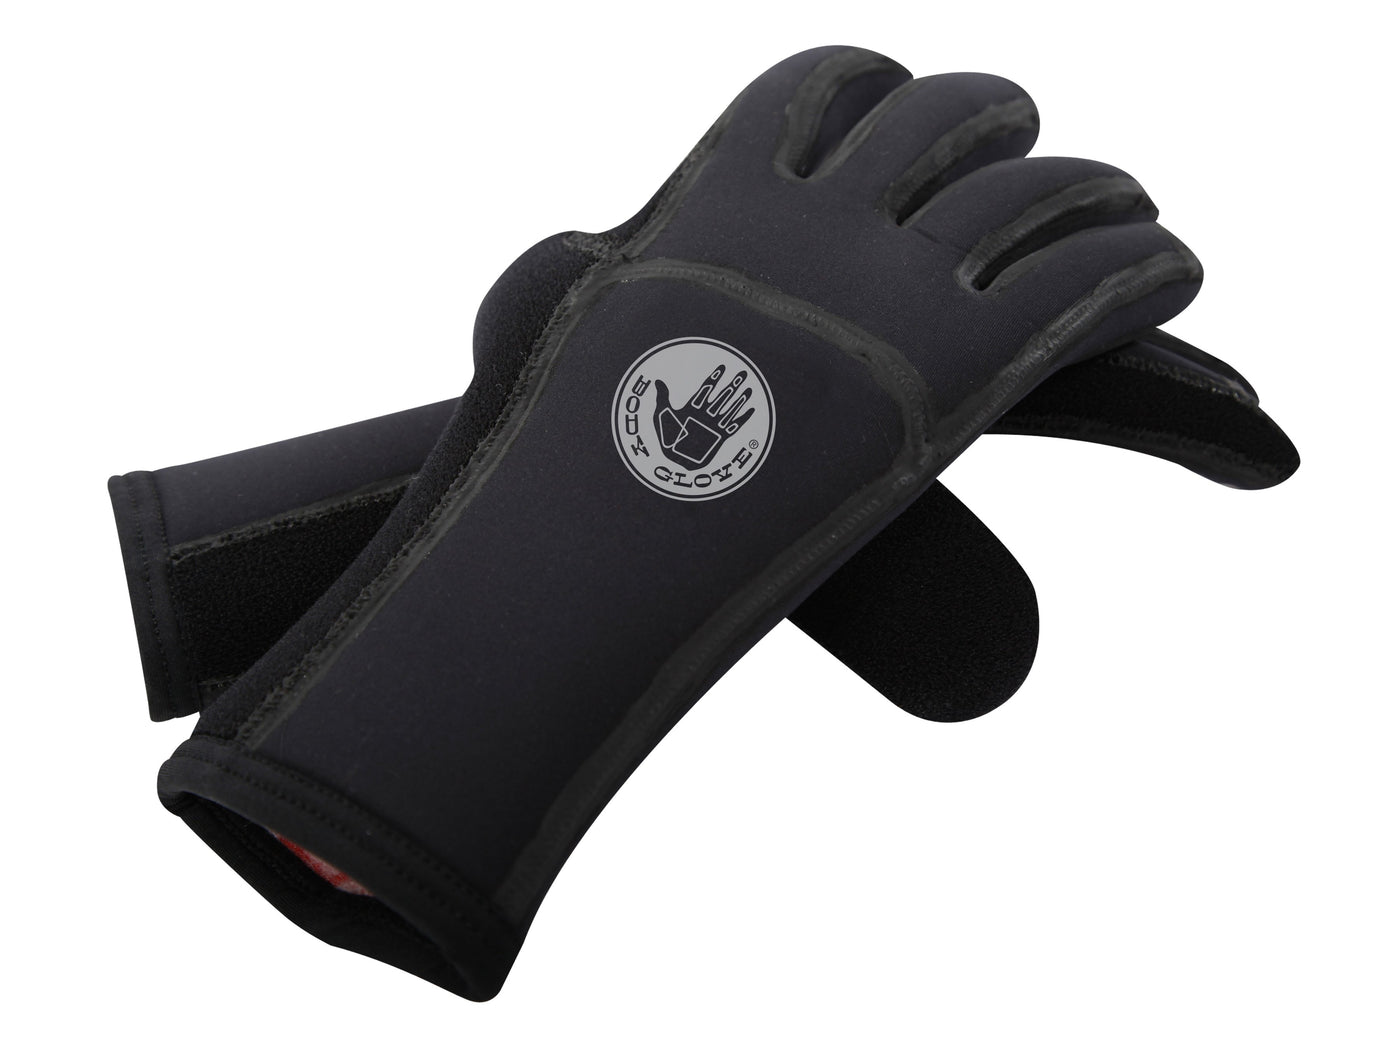 pair of Vapor X 5mm Glove